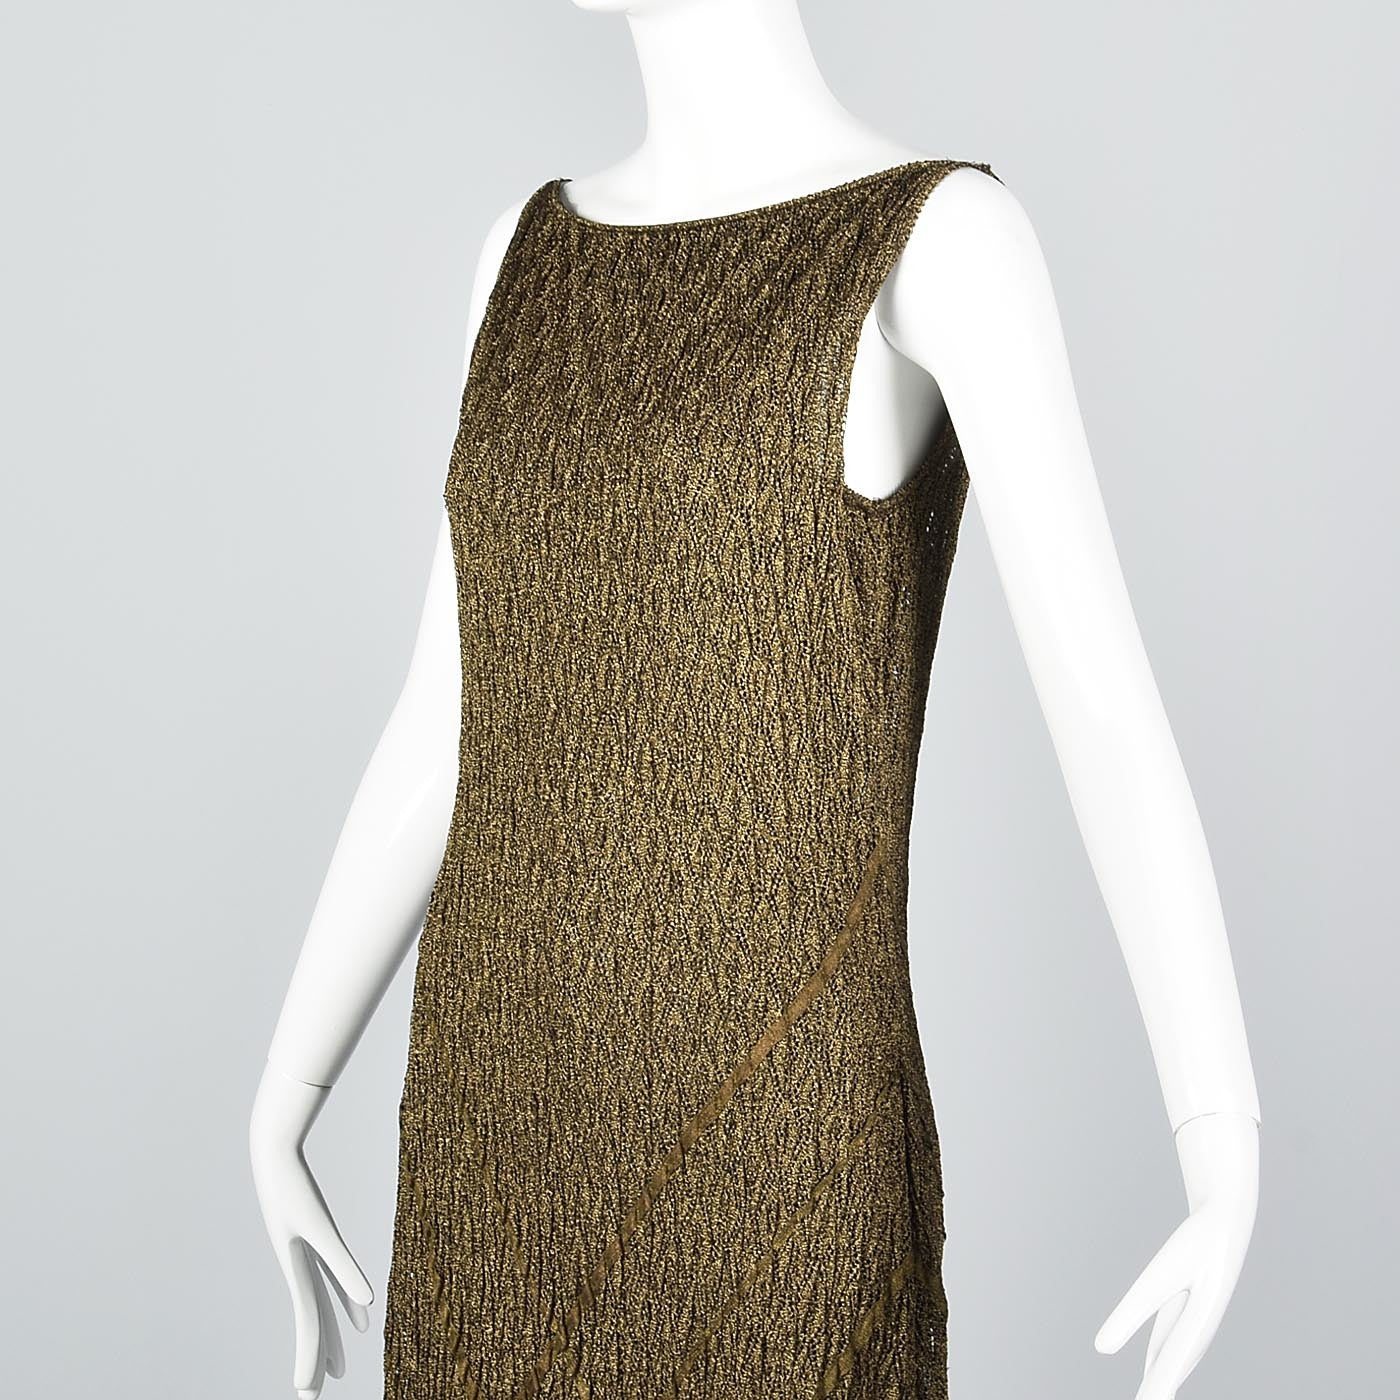 Christian Dior Boutique John Galliano Metallic Gold Evening Dress